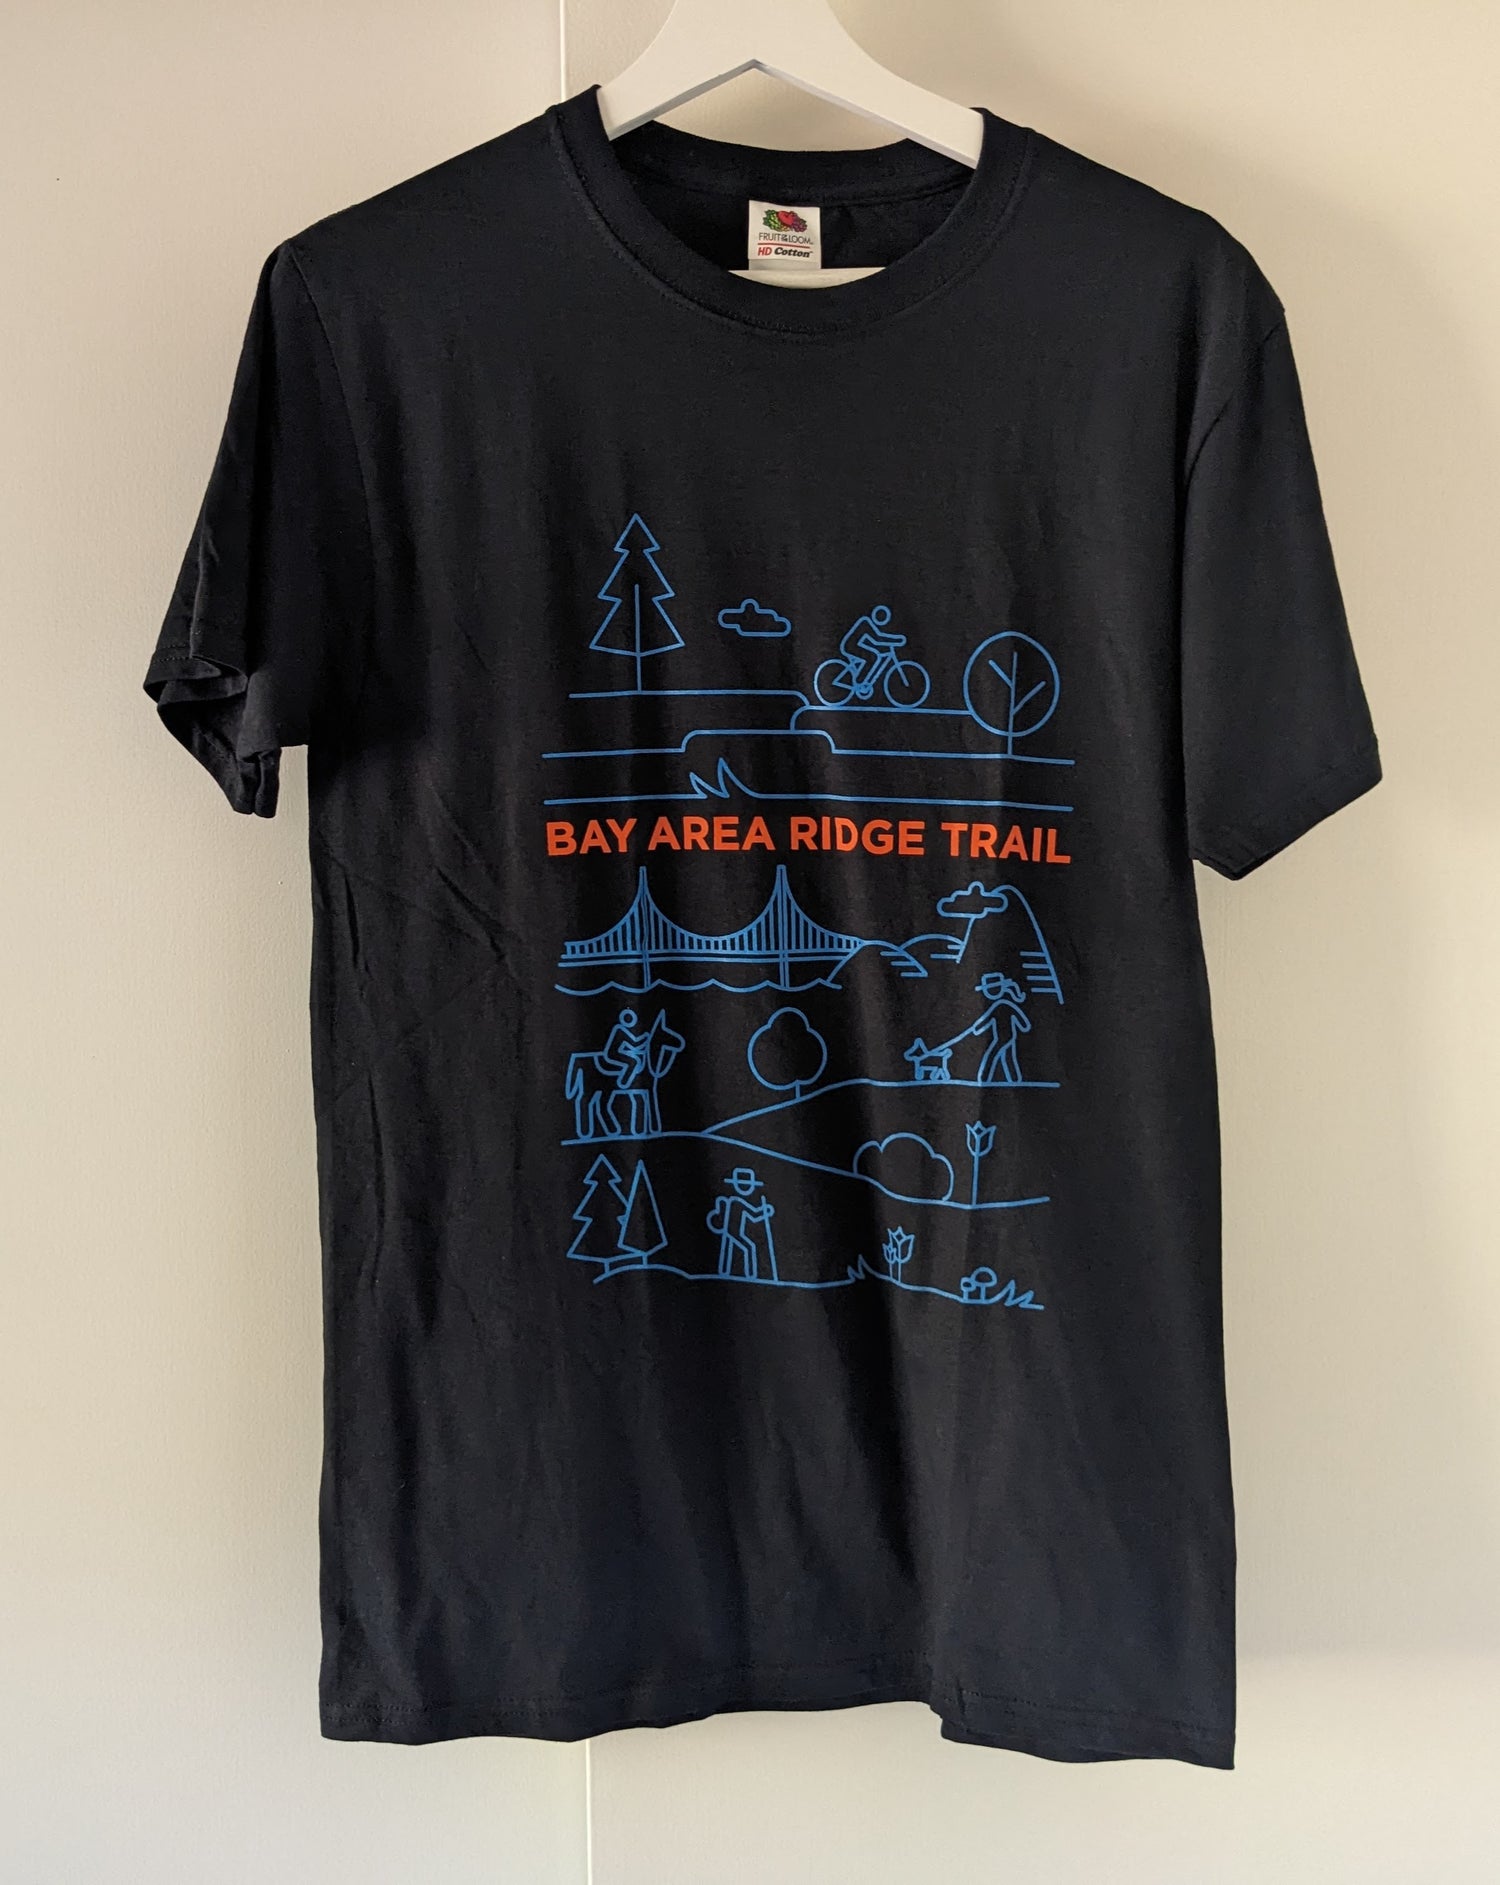 Black Bay Area Ridge Trail shirt